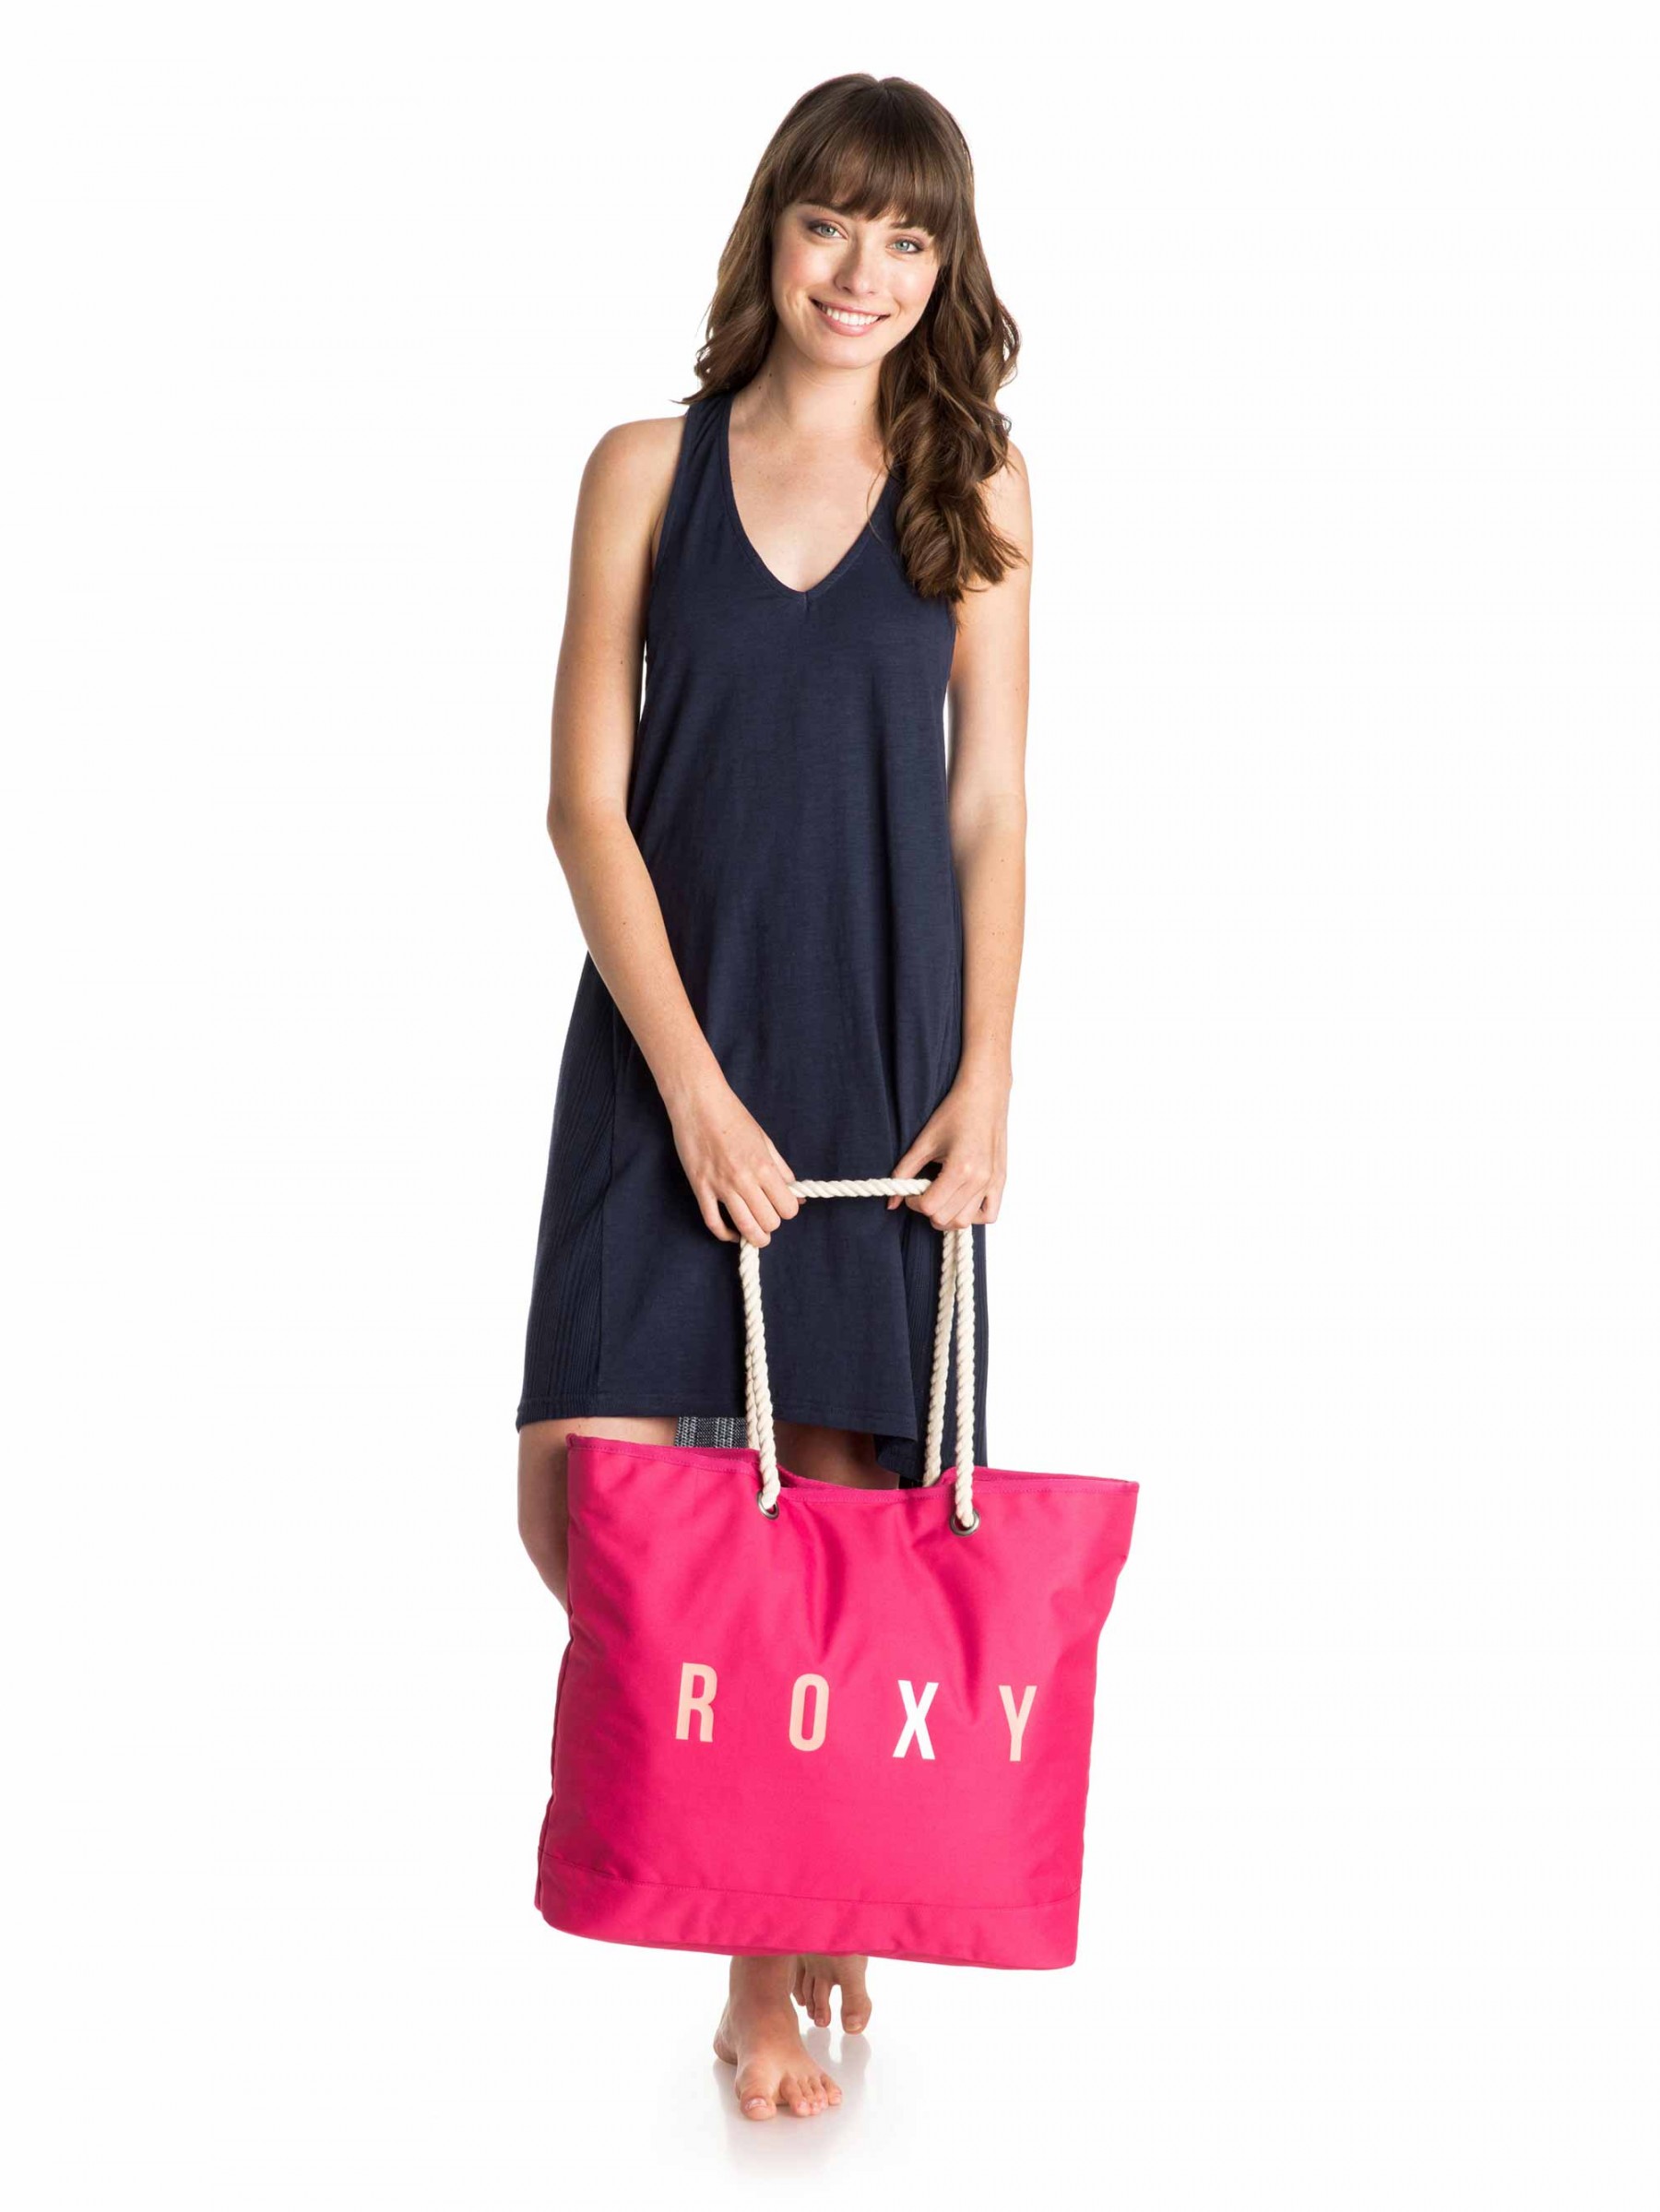 ROXY™ Womens Tropical Vibe Bag ROXY ktmart.vn 3